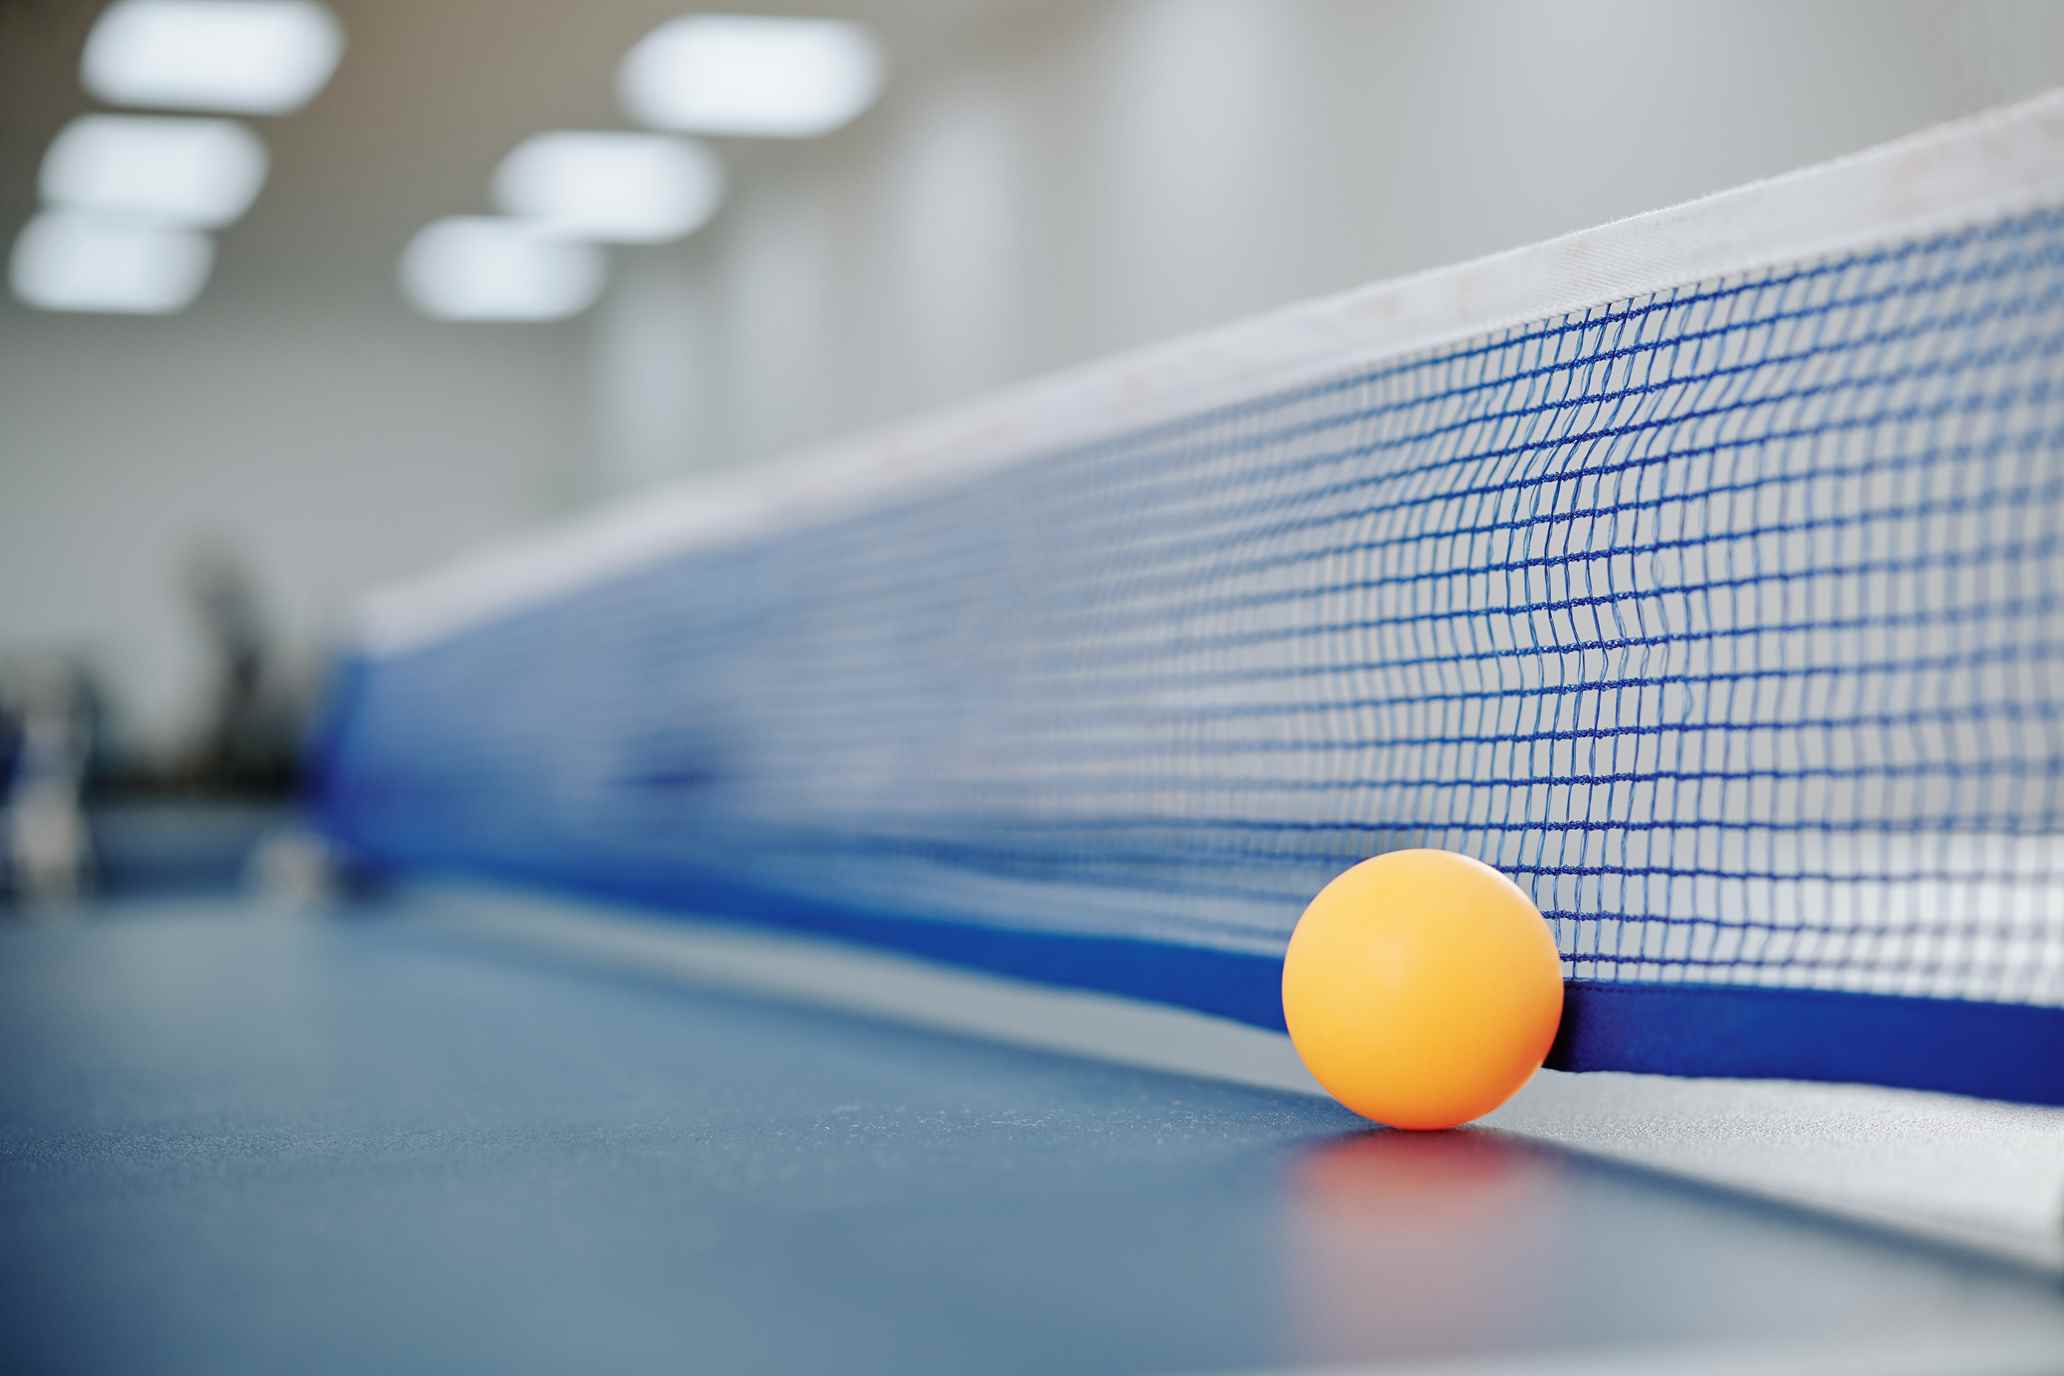 Best Table Tennis Ball: Noob vs Pro (1-Star vs 3-Star Balls)